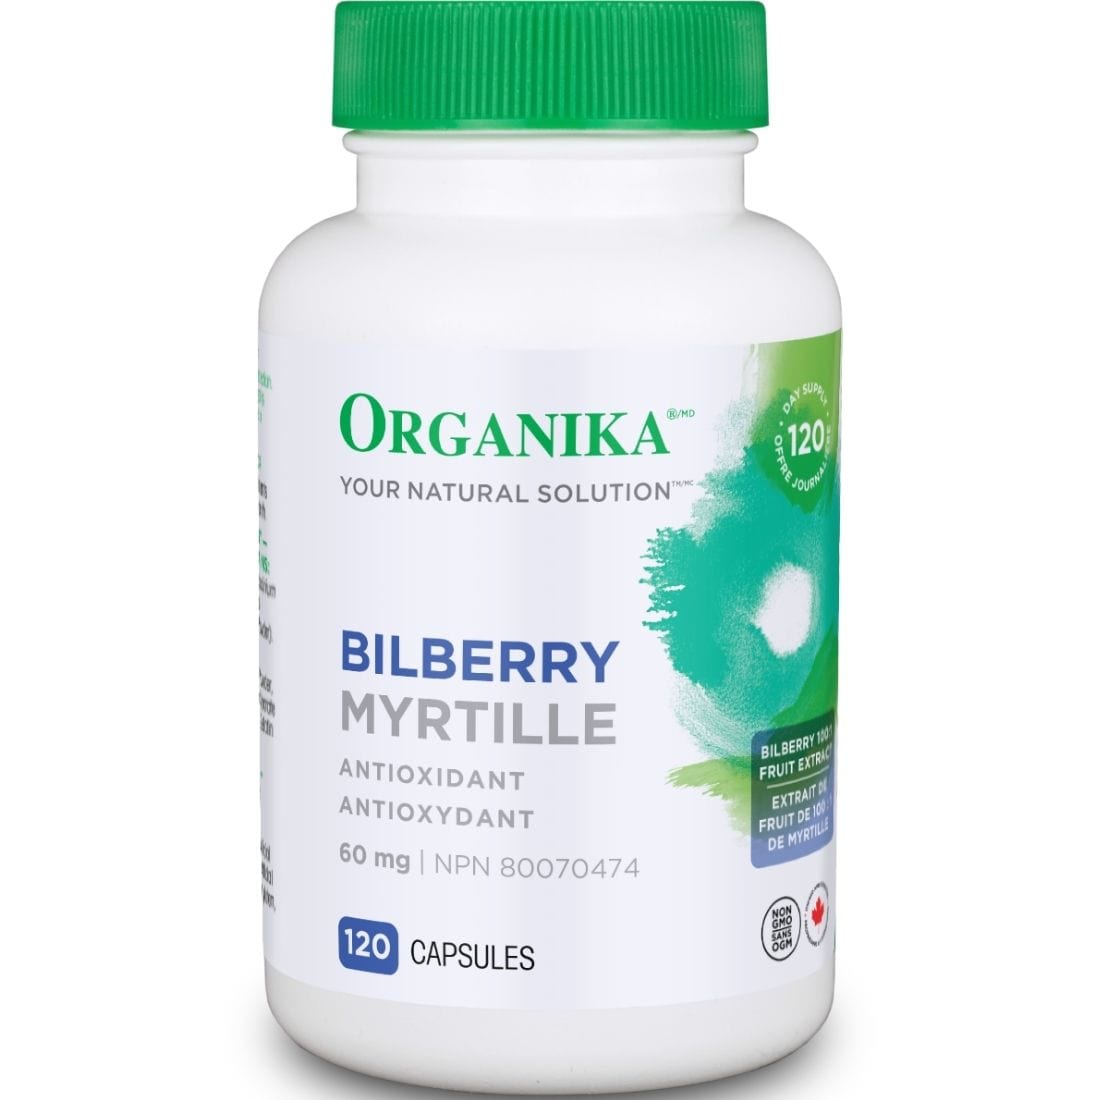 Organika Bilberry Extract, 60mg